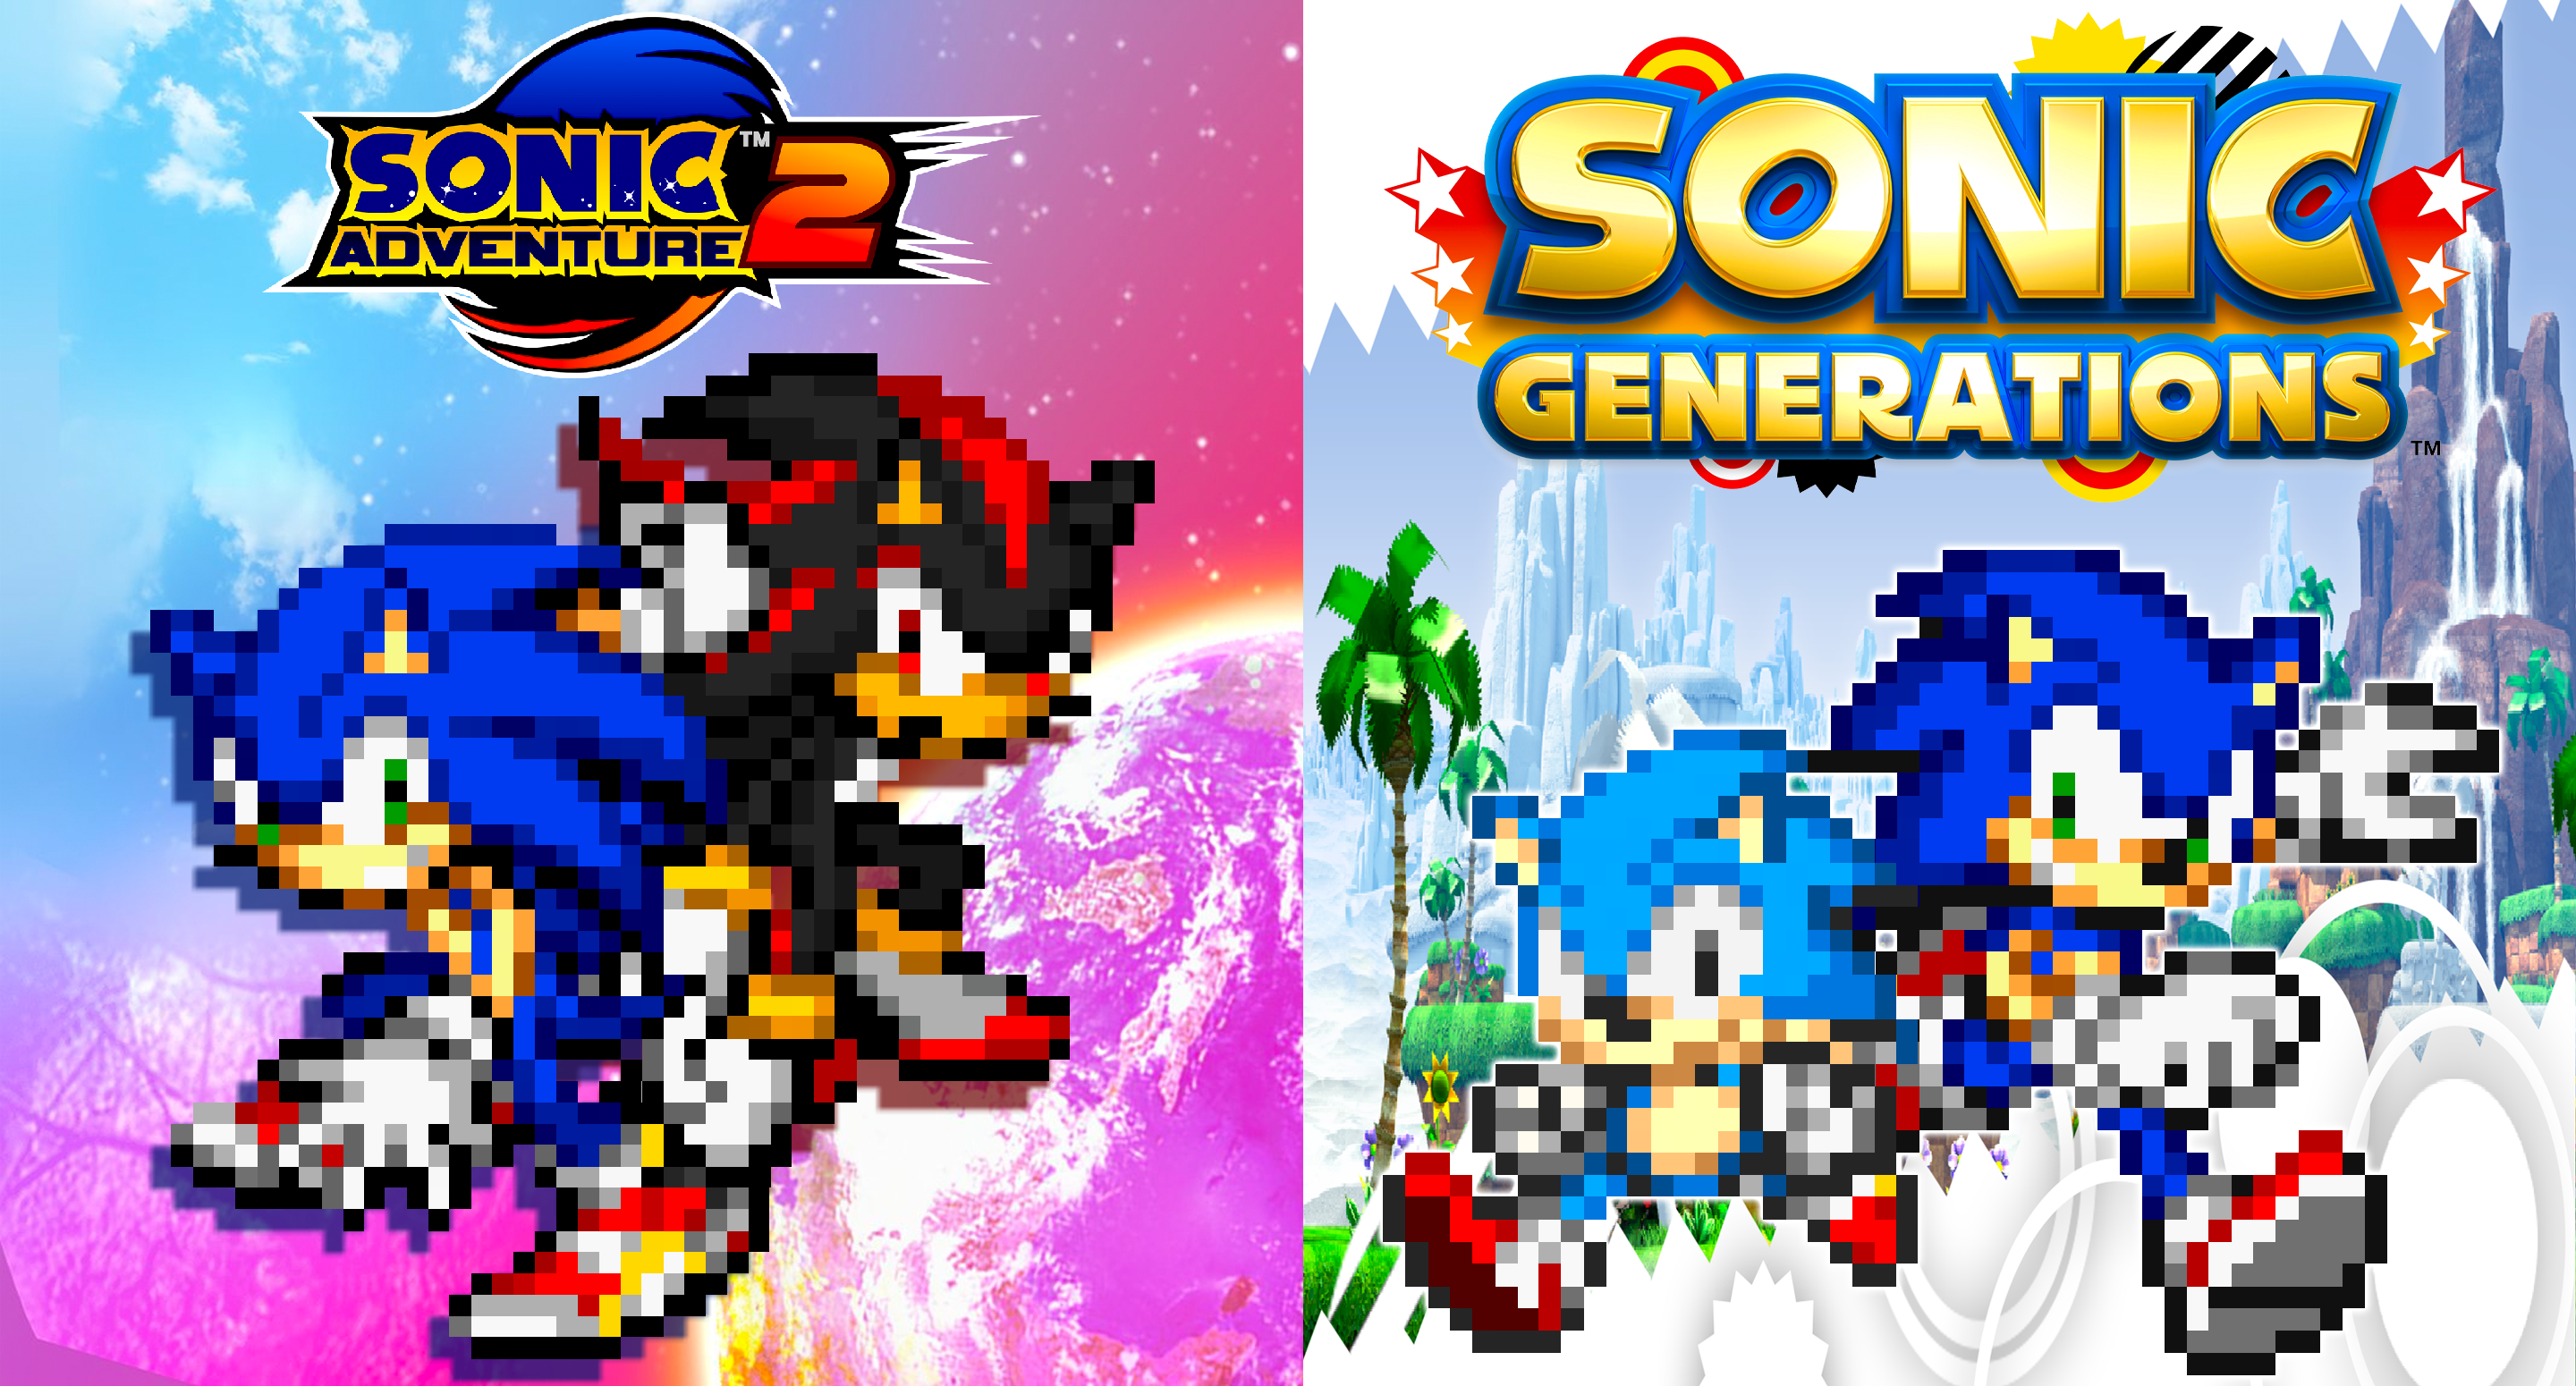 Neo-Metal Sonic [Sonic Adventure DX] [Mods]